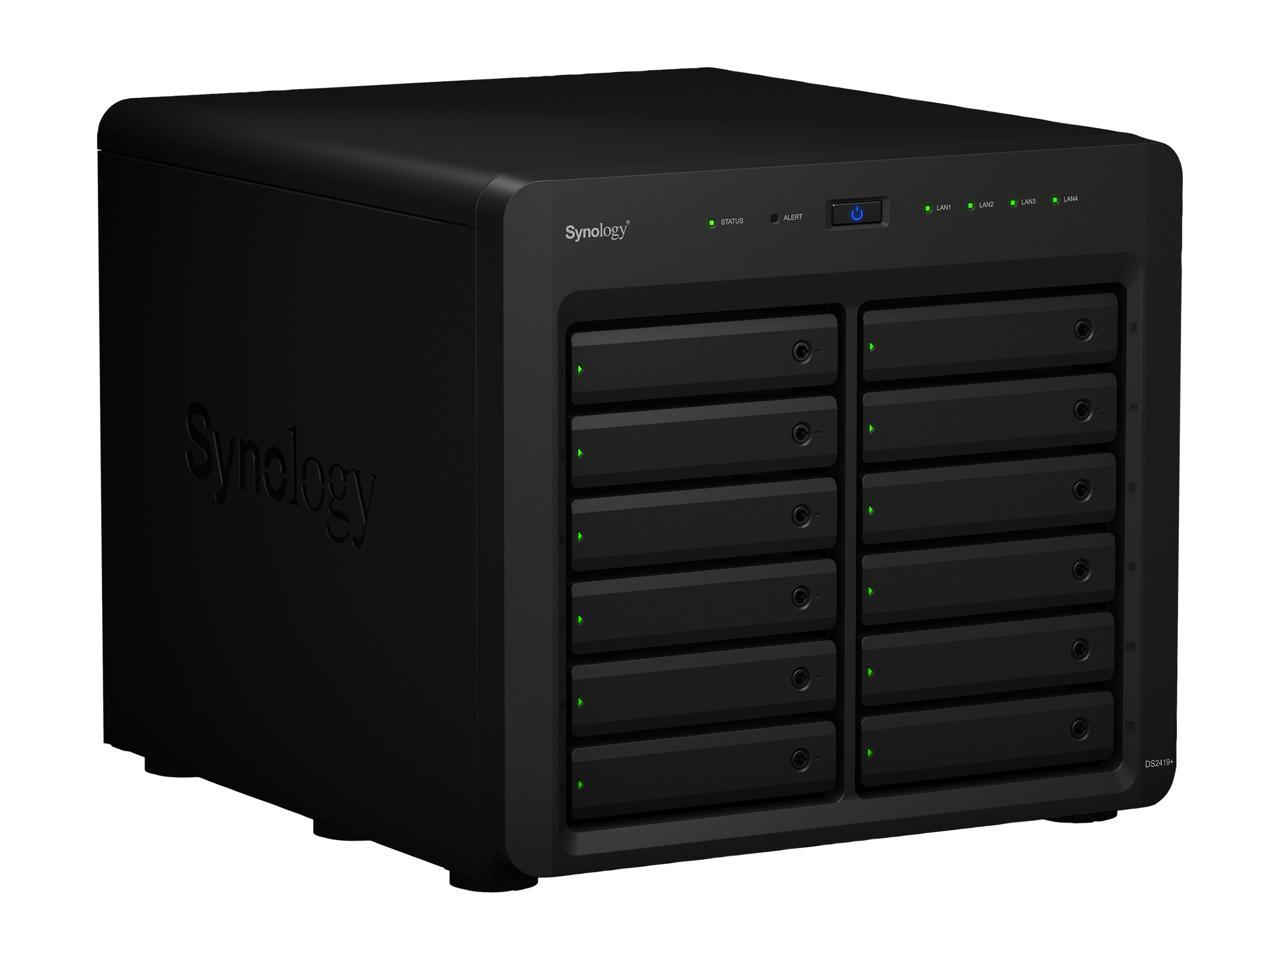 Synology 12 bay NAS DiskStation DS2419+ (Diskless)